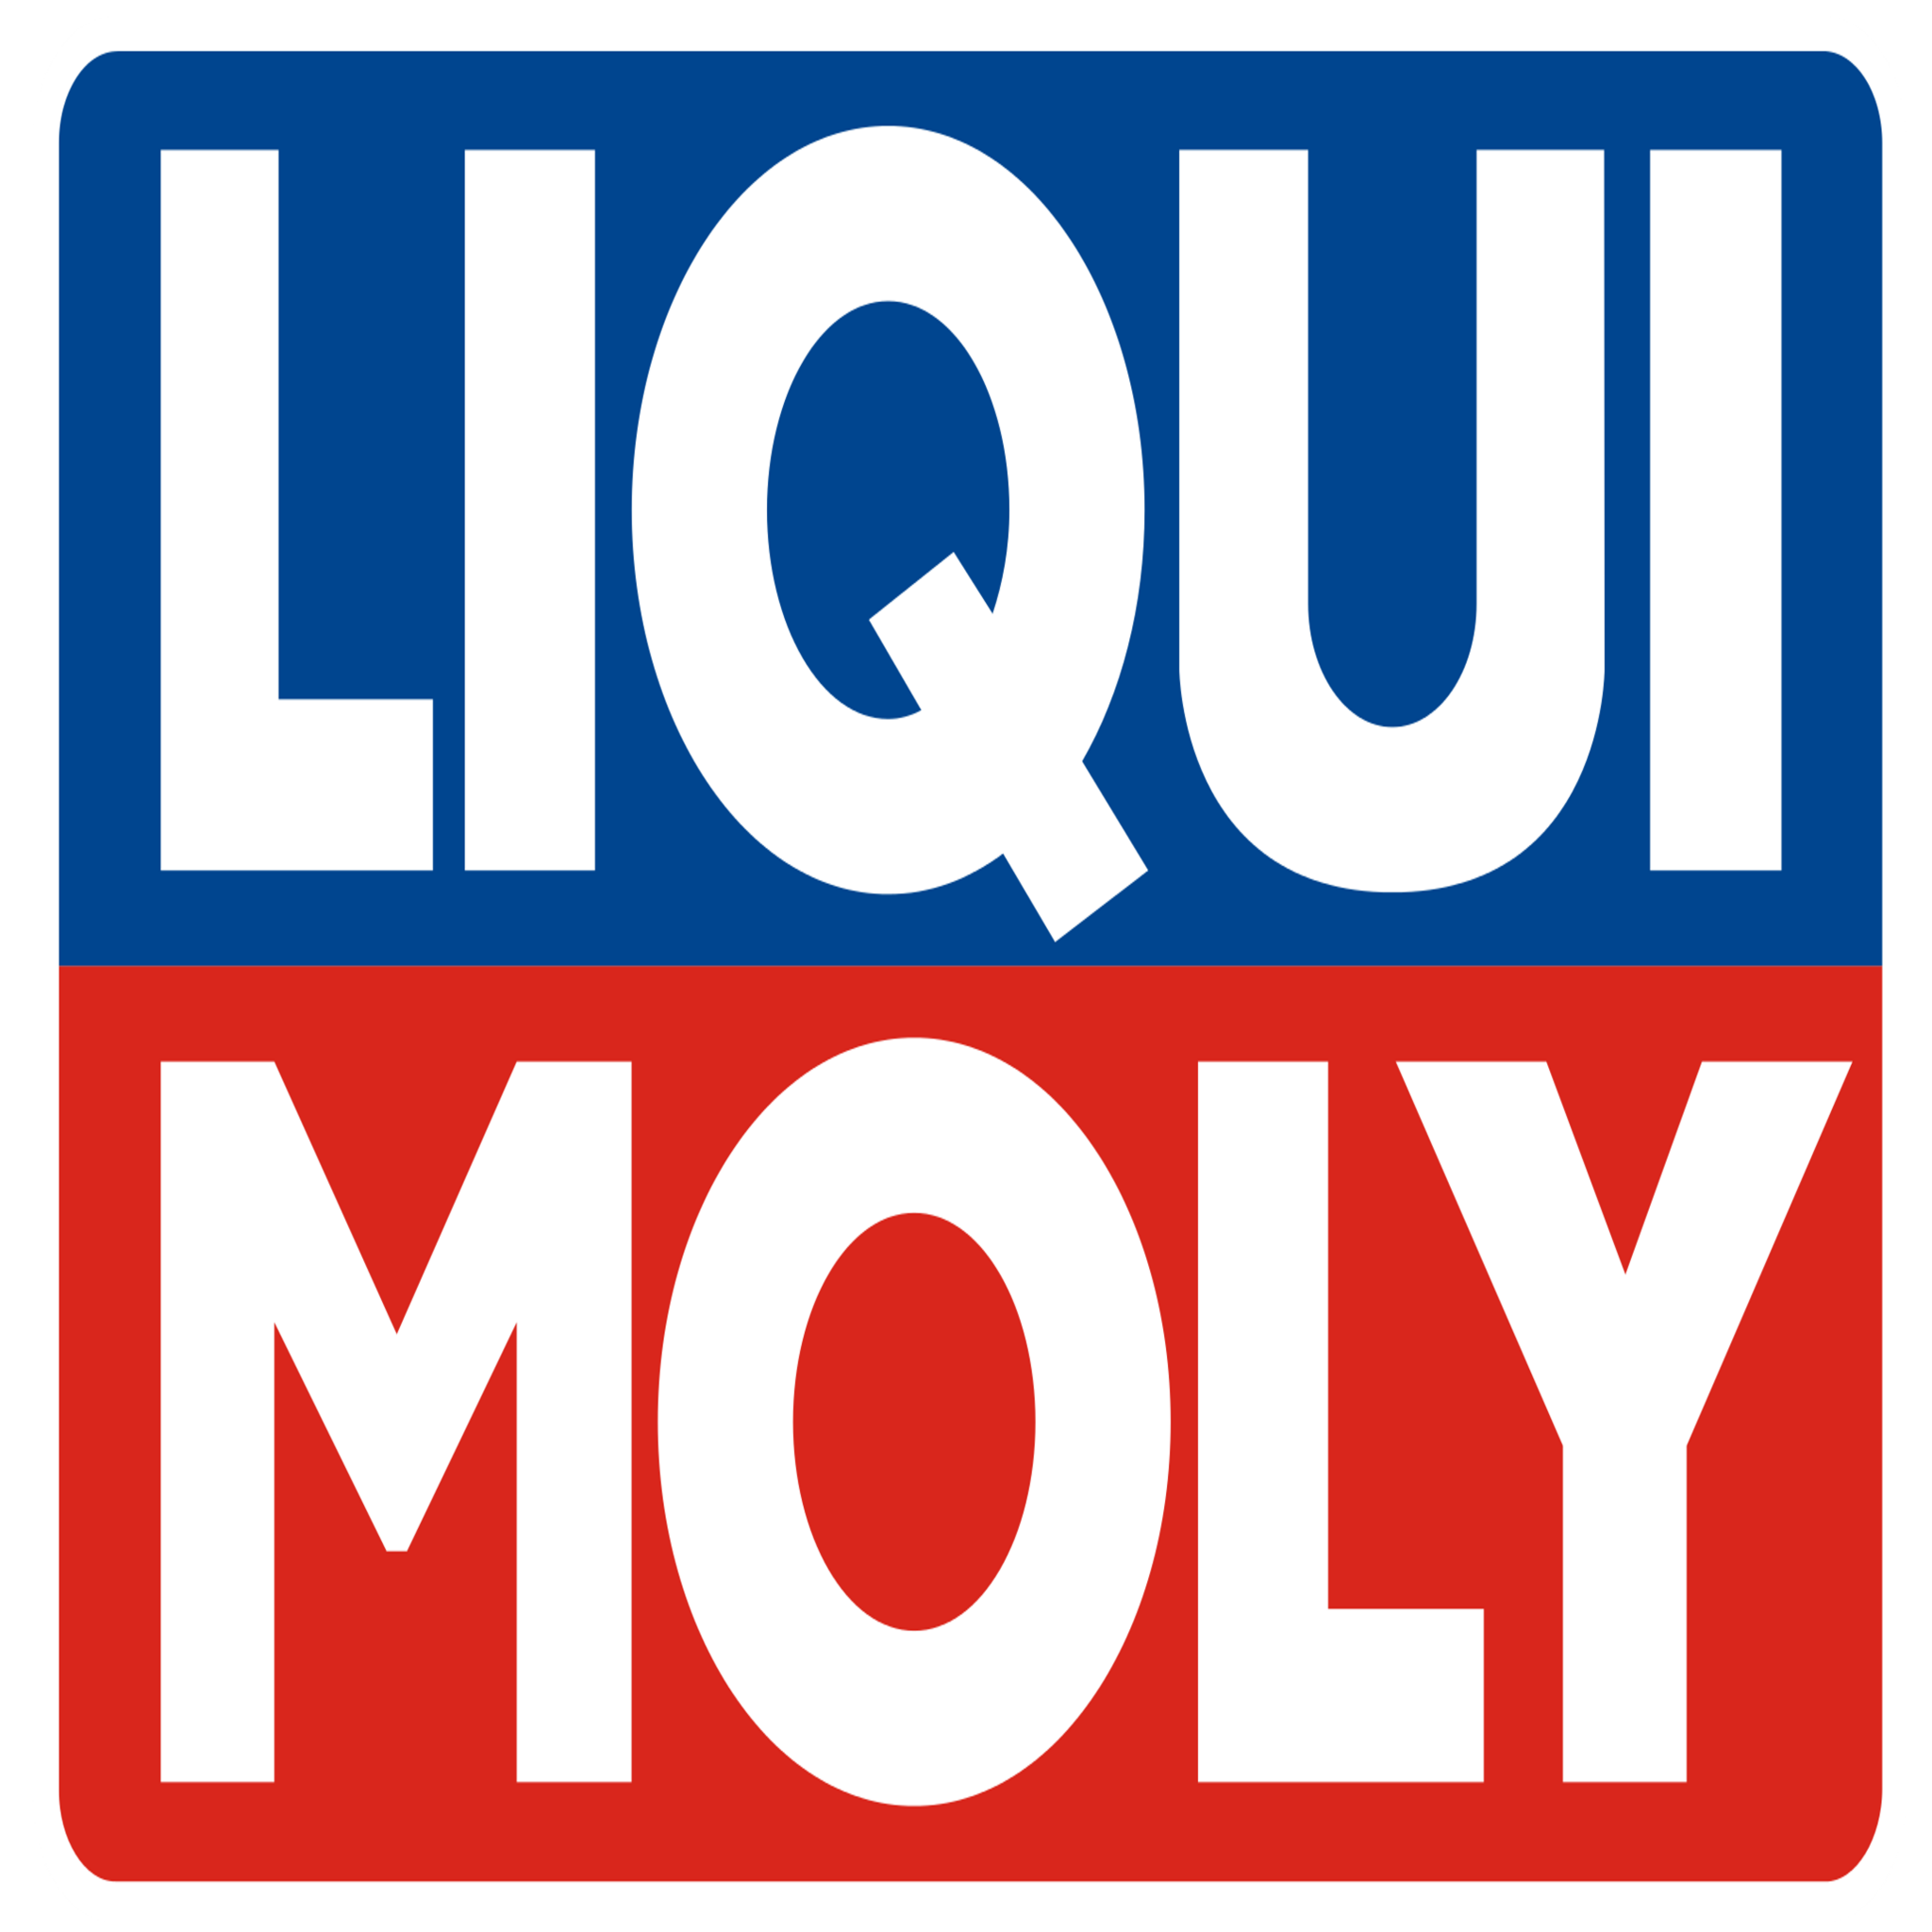 Liqui. Моторное масло Ликви Молли логотип. Масло Liqui Moly логотип. Liqui Moly ----//----. Логотип моторного масла Liqui Moly.